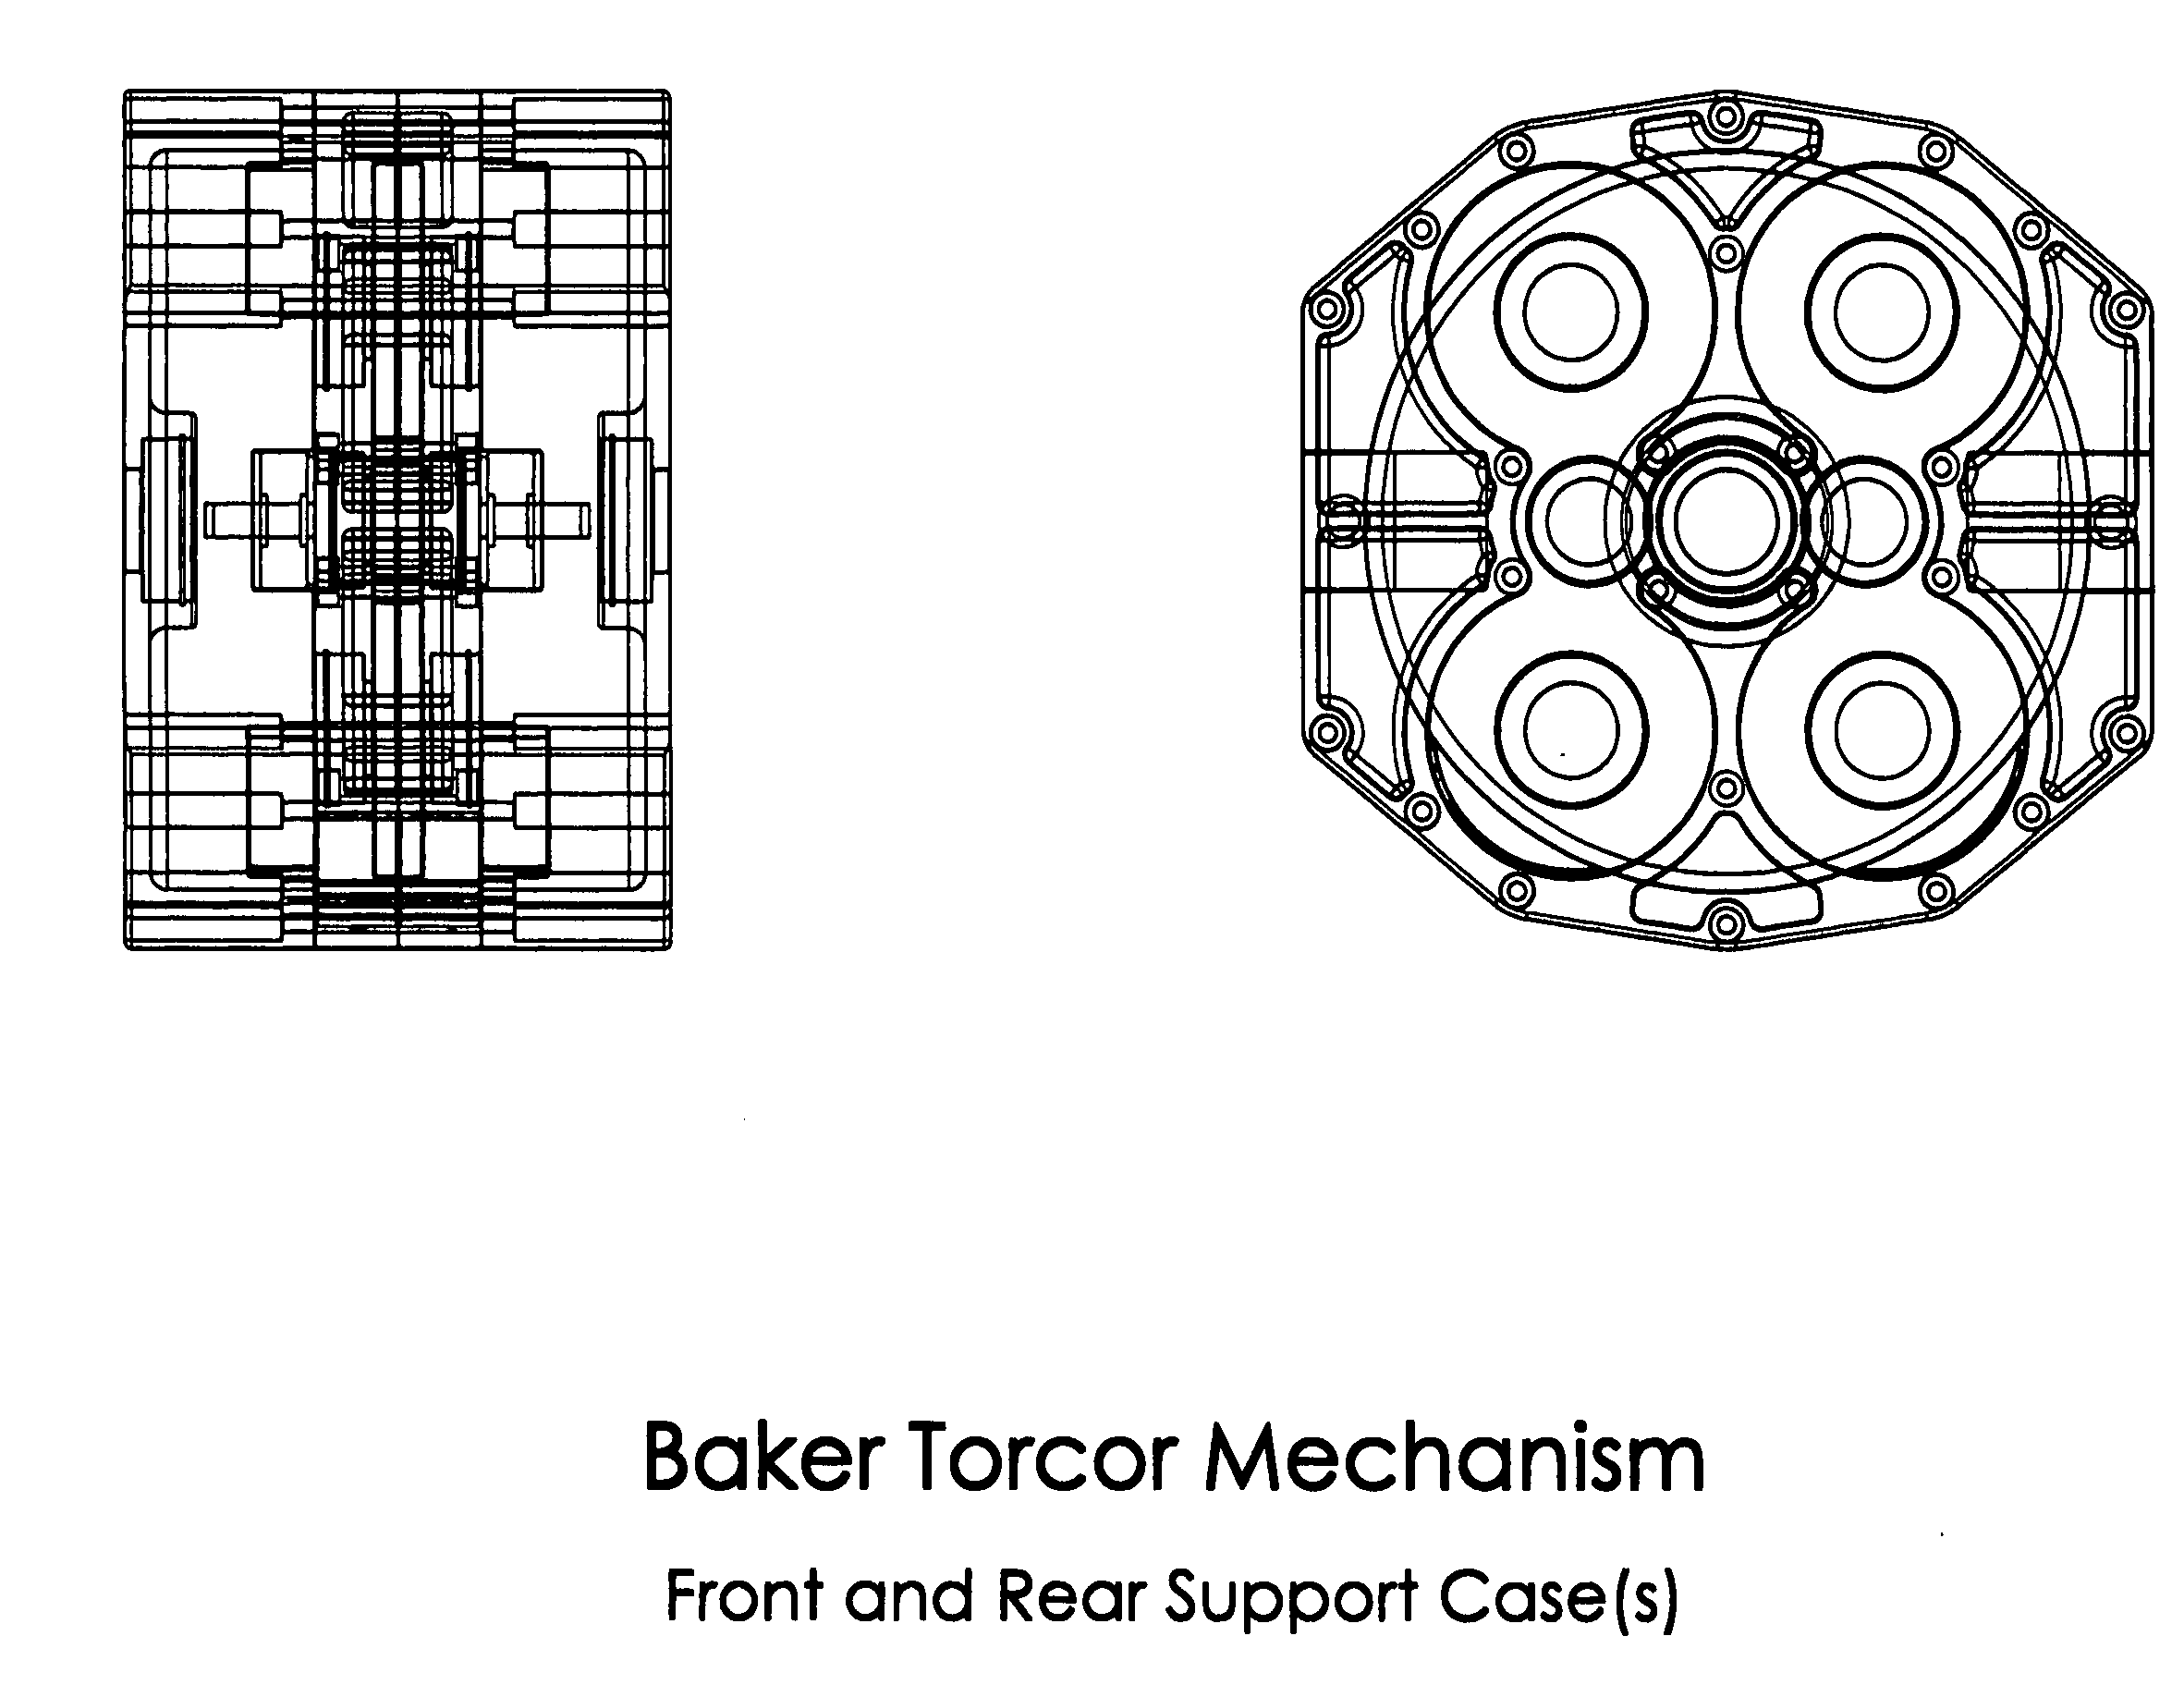 Baker Torcor motion conversion mechanism